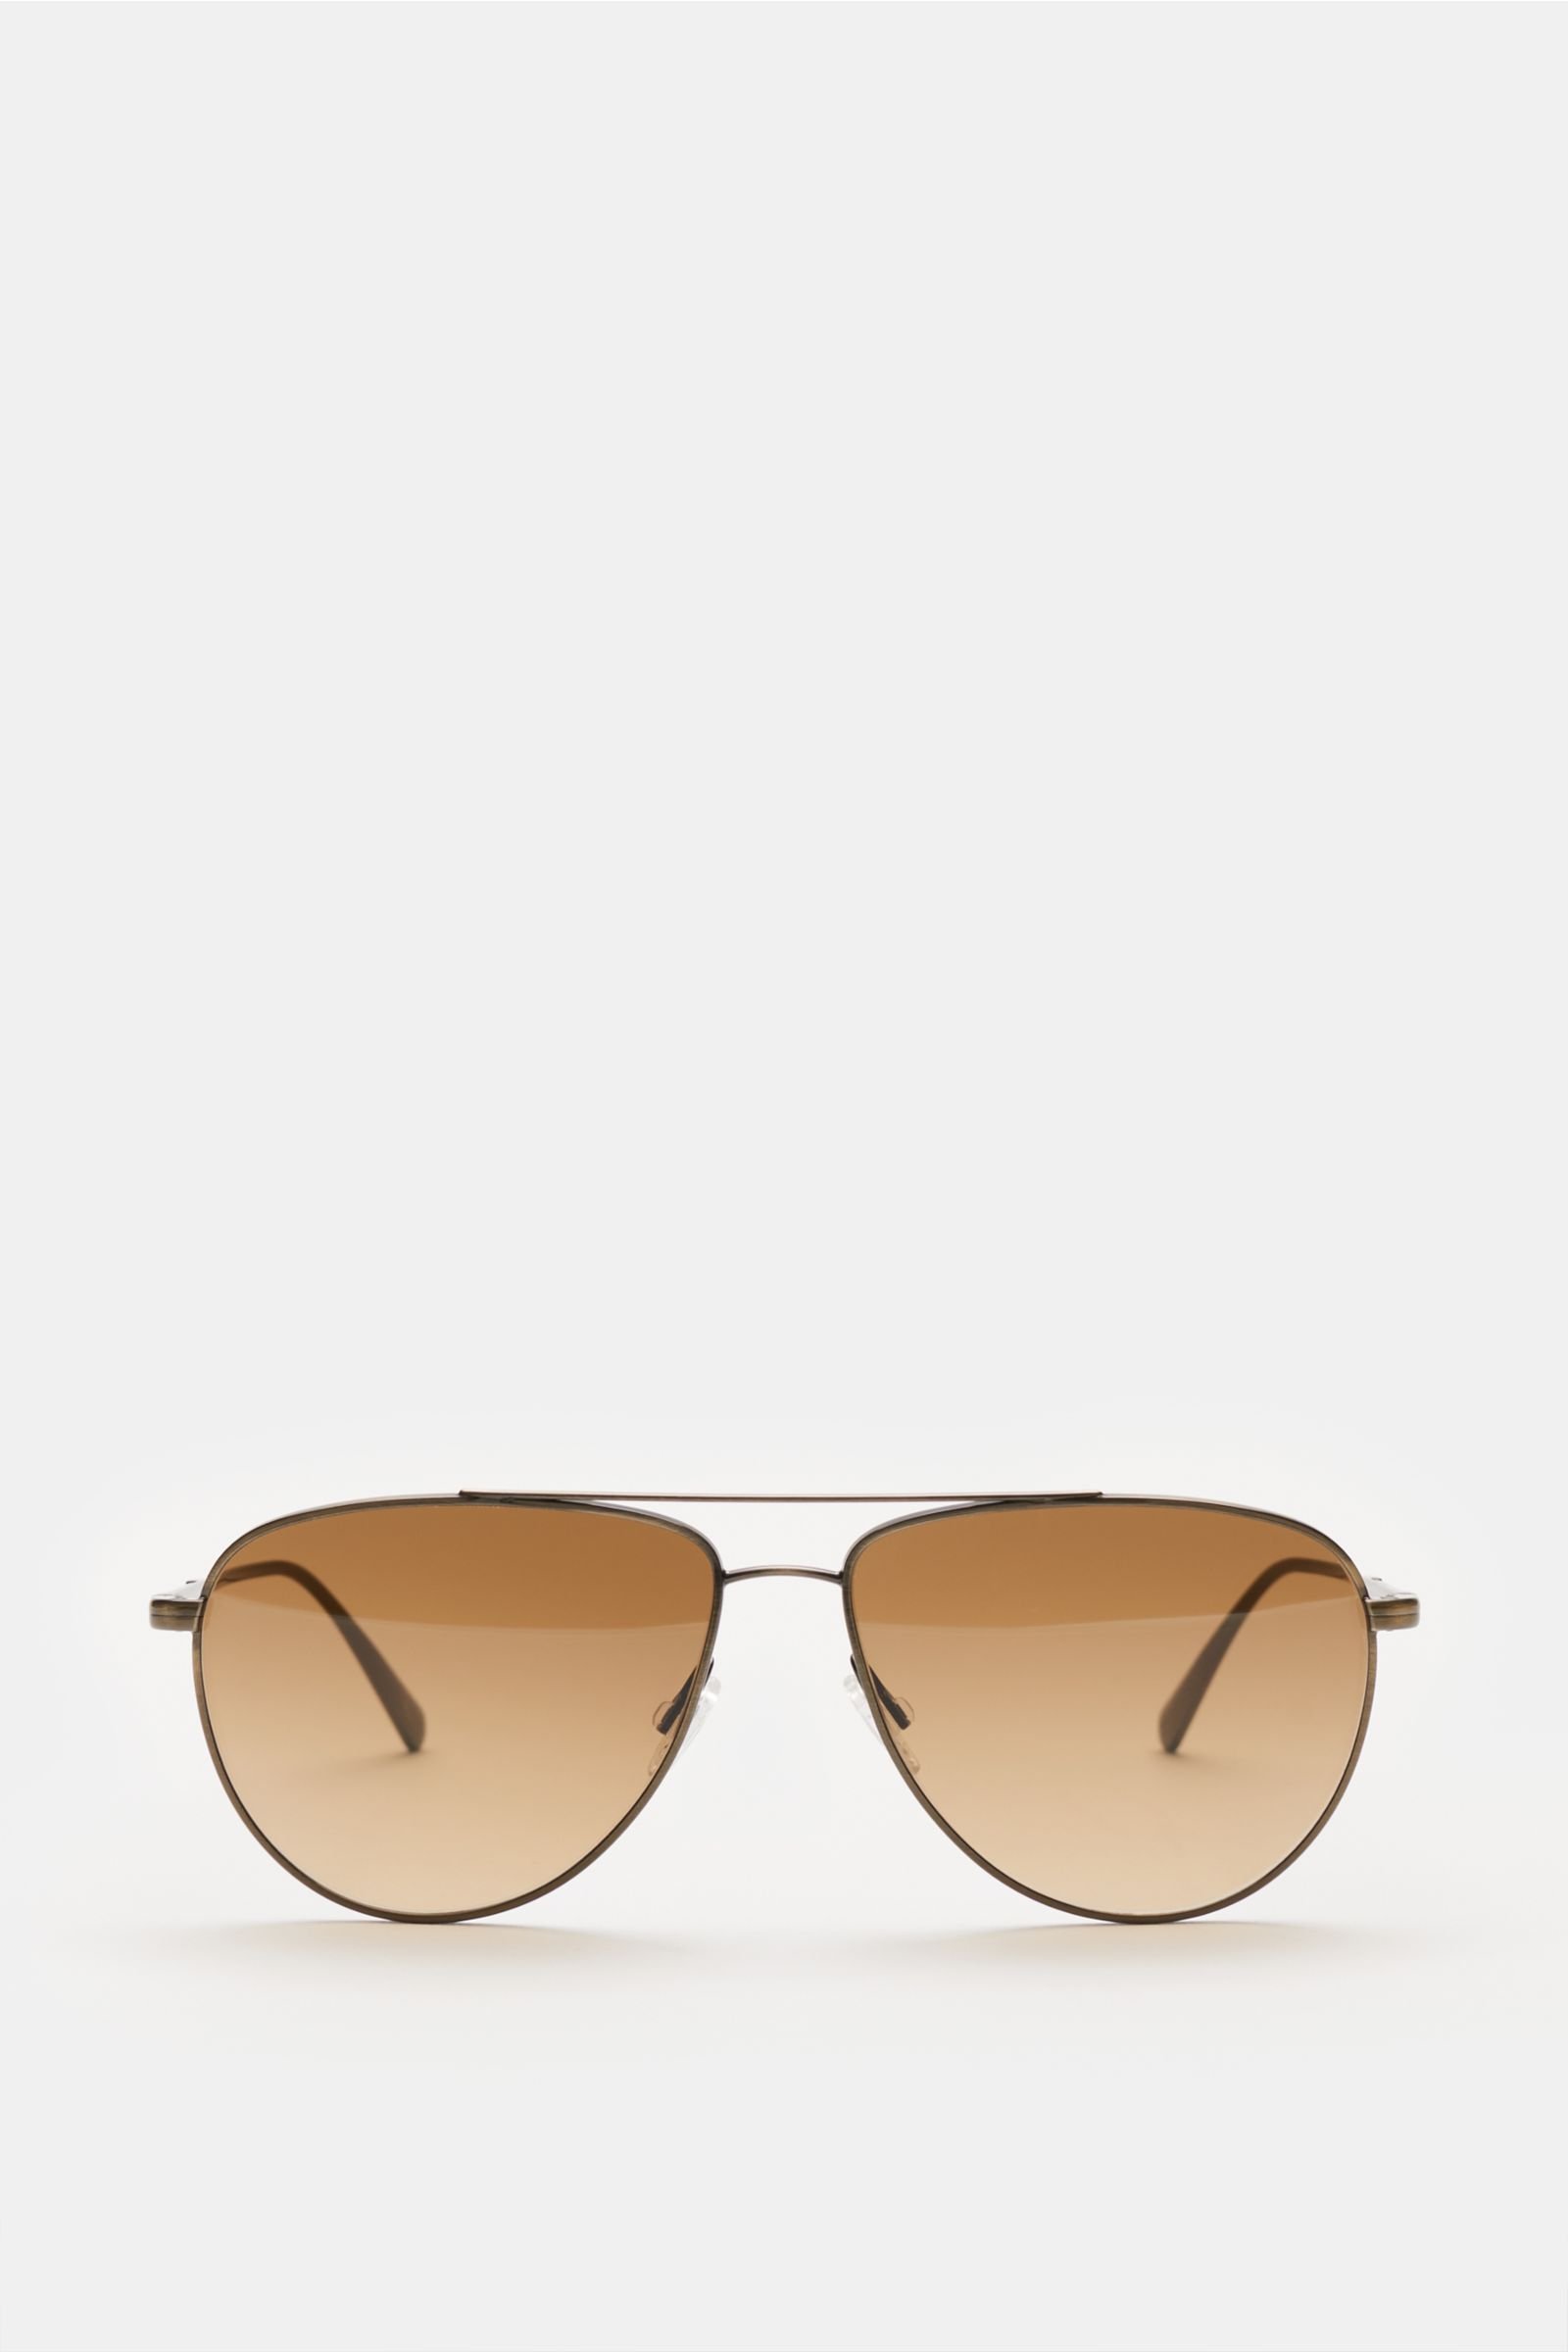 Sunglasses 'Disoriano' antique gold/light brown 